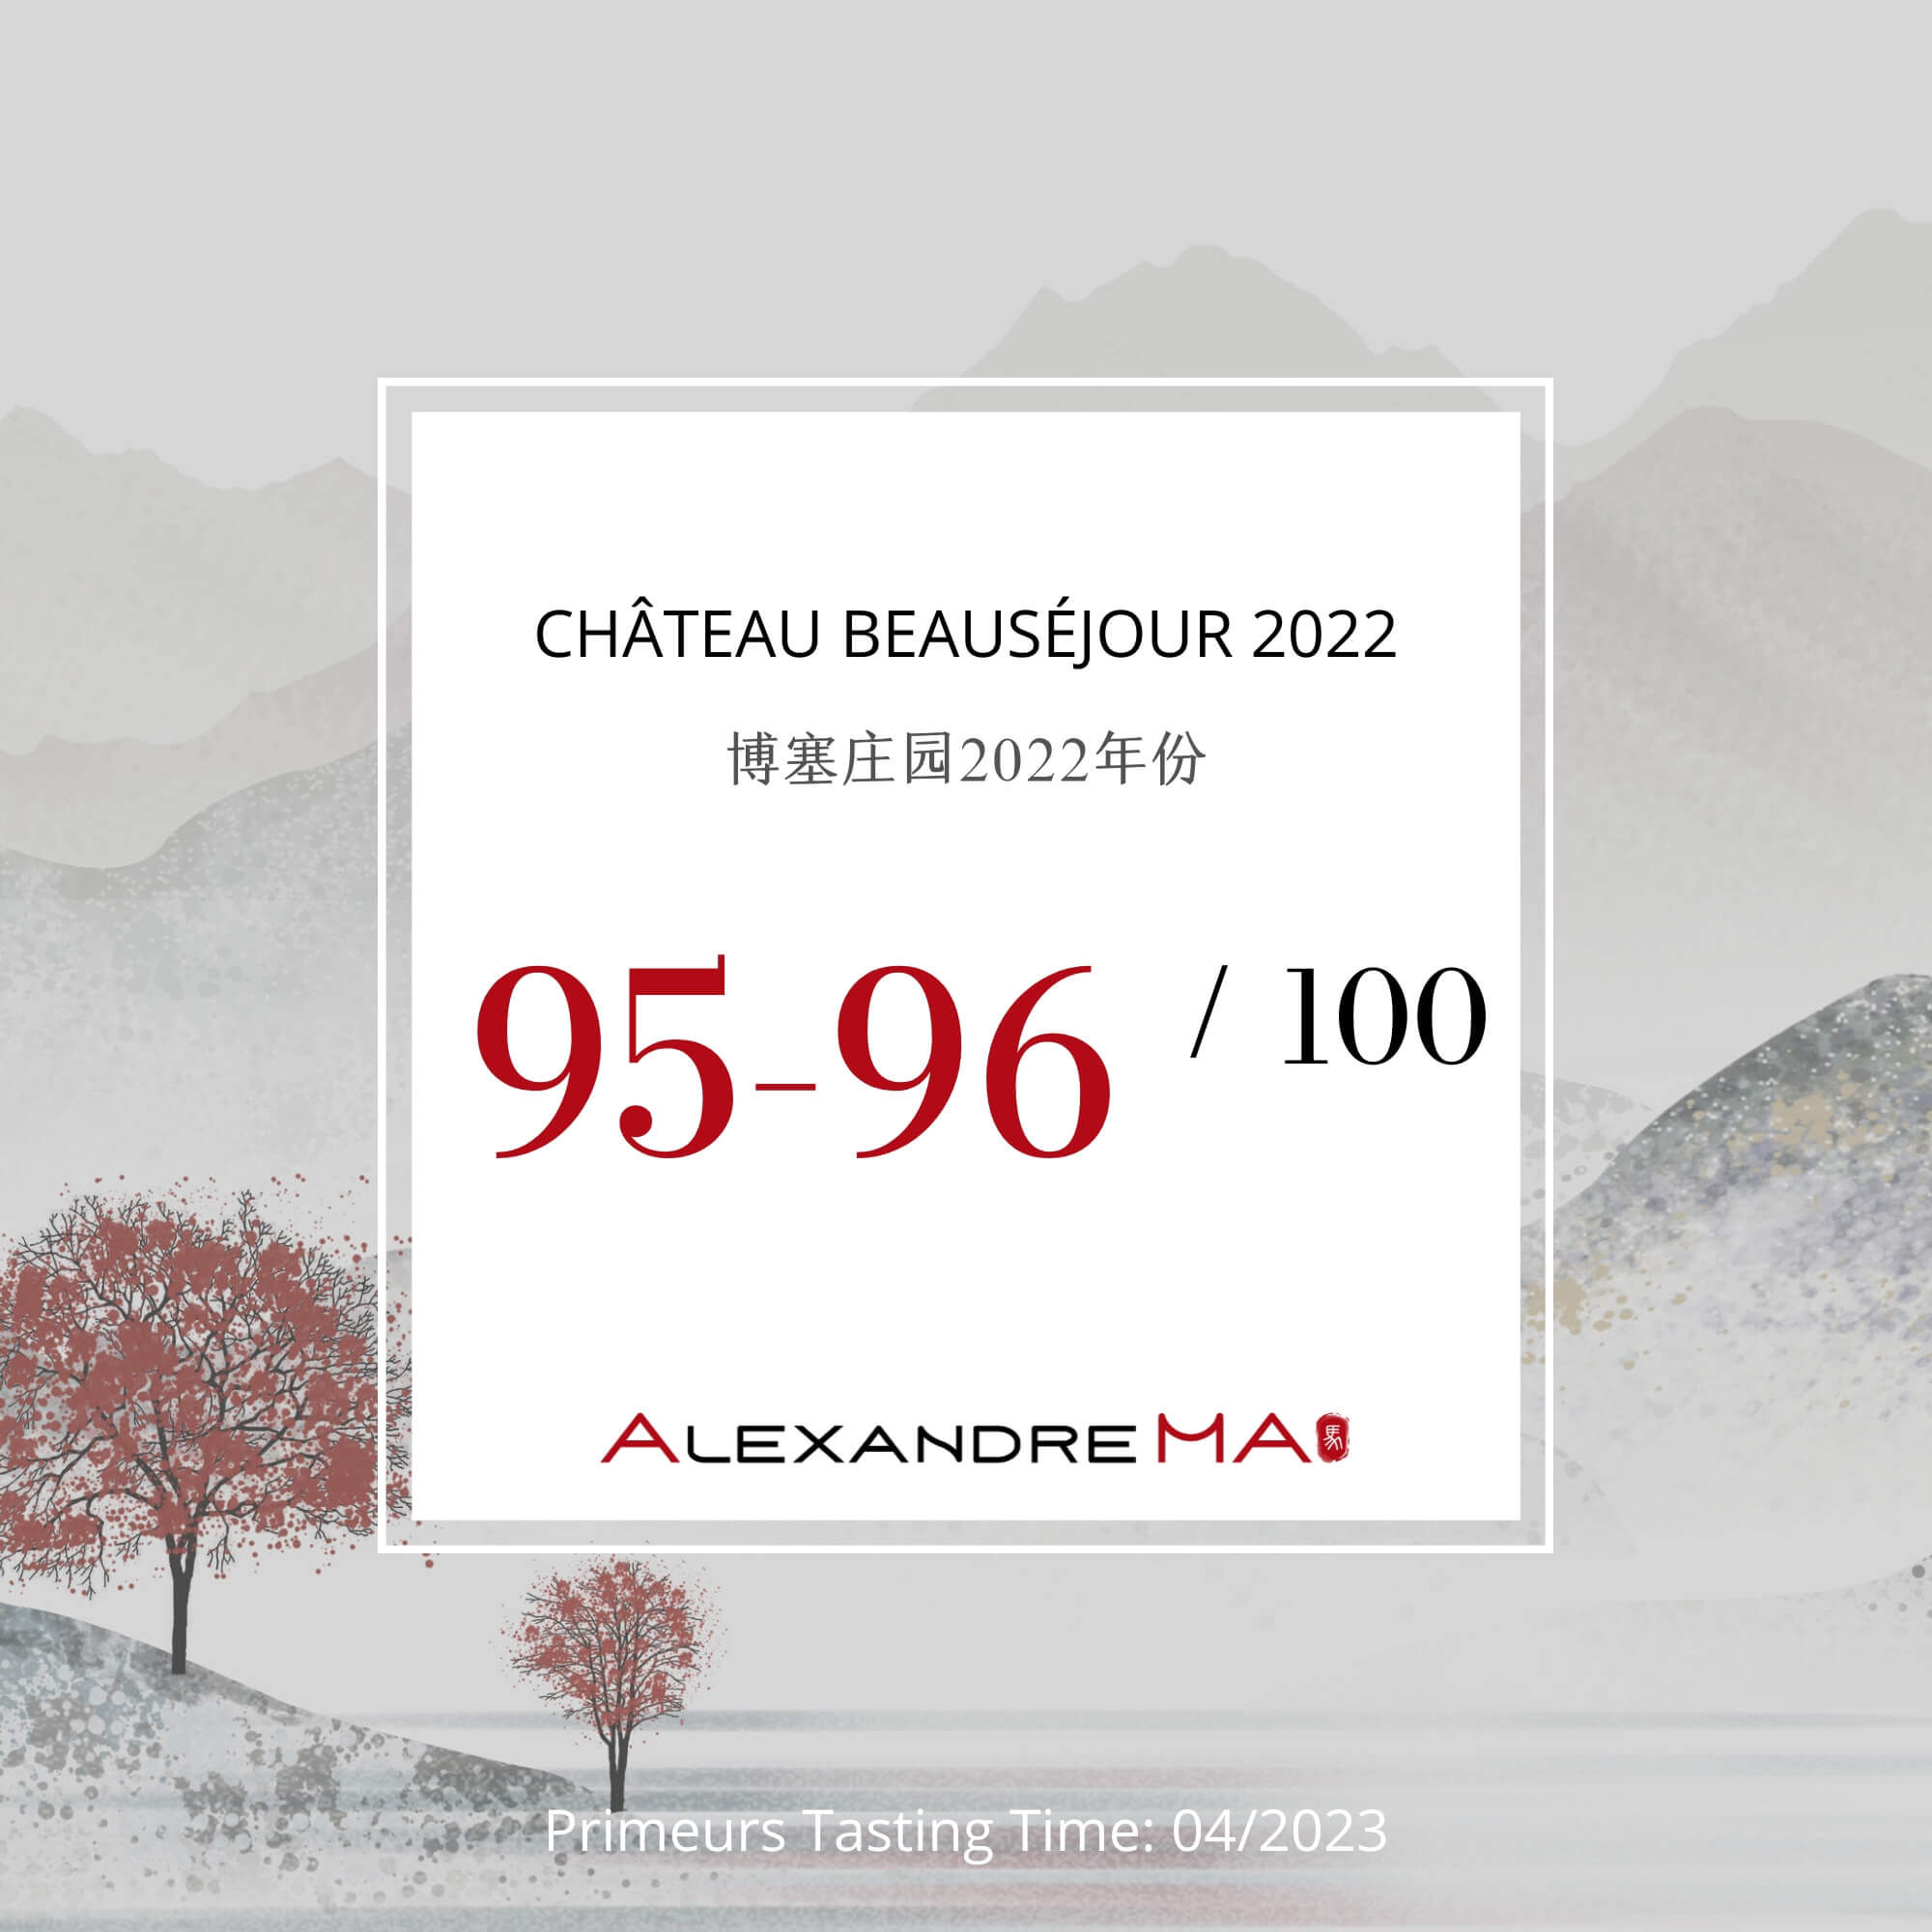 Château Beauséjour 2022 Primeurs - Alexandre MA